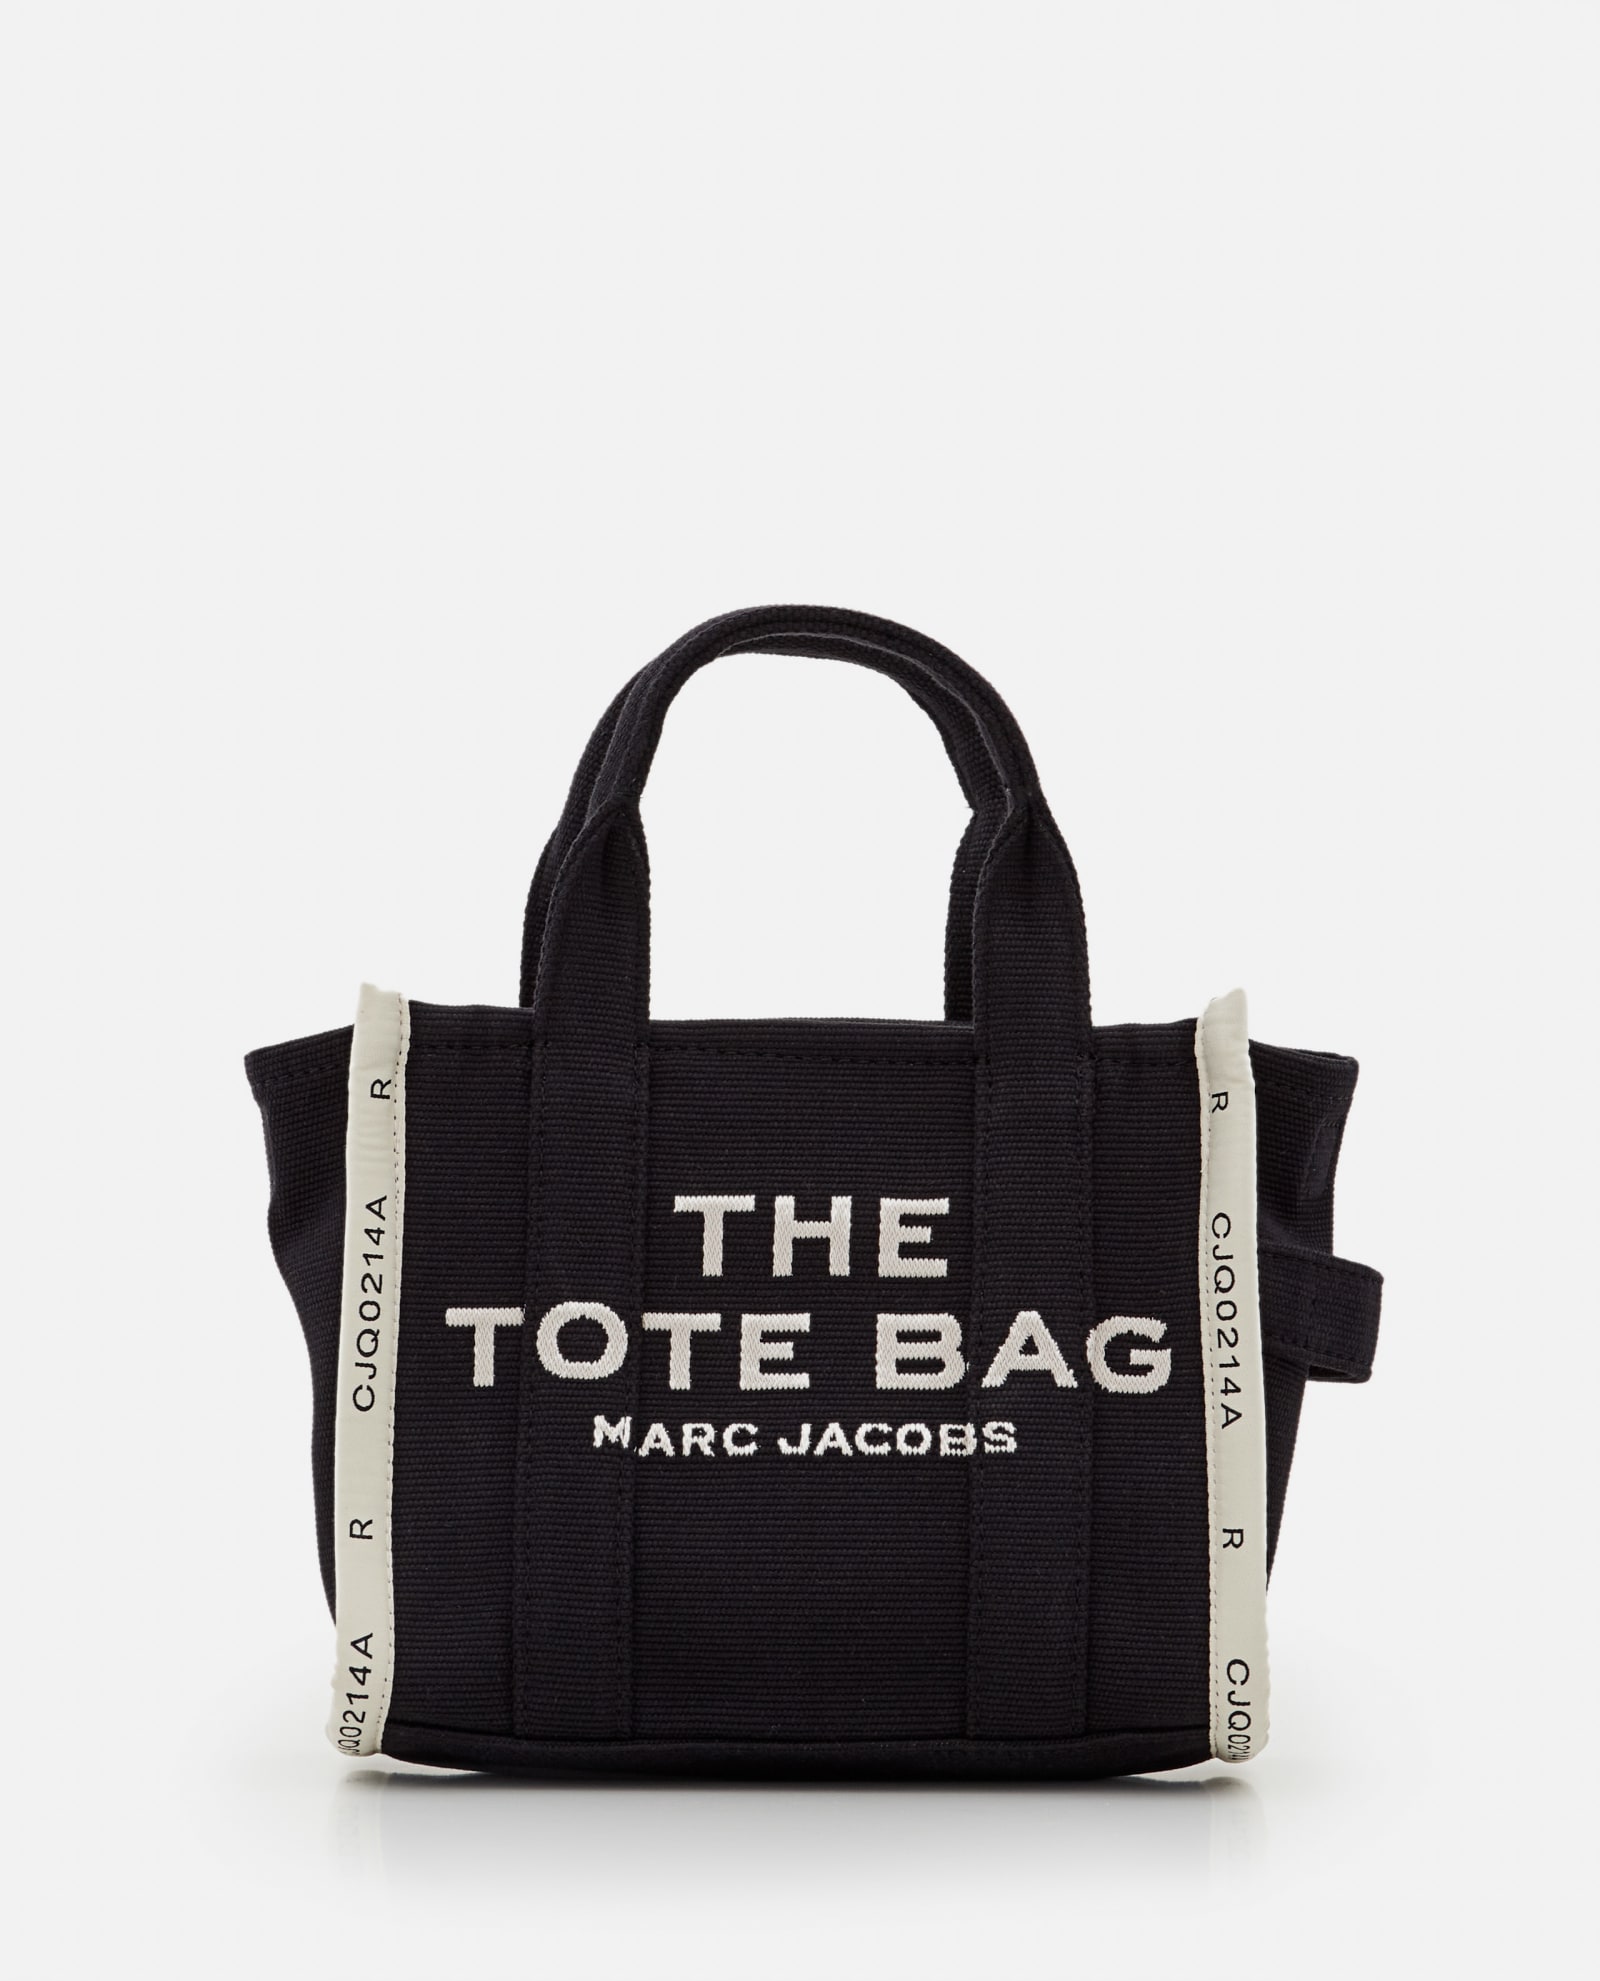 The Small Jacquard Tote Bag